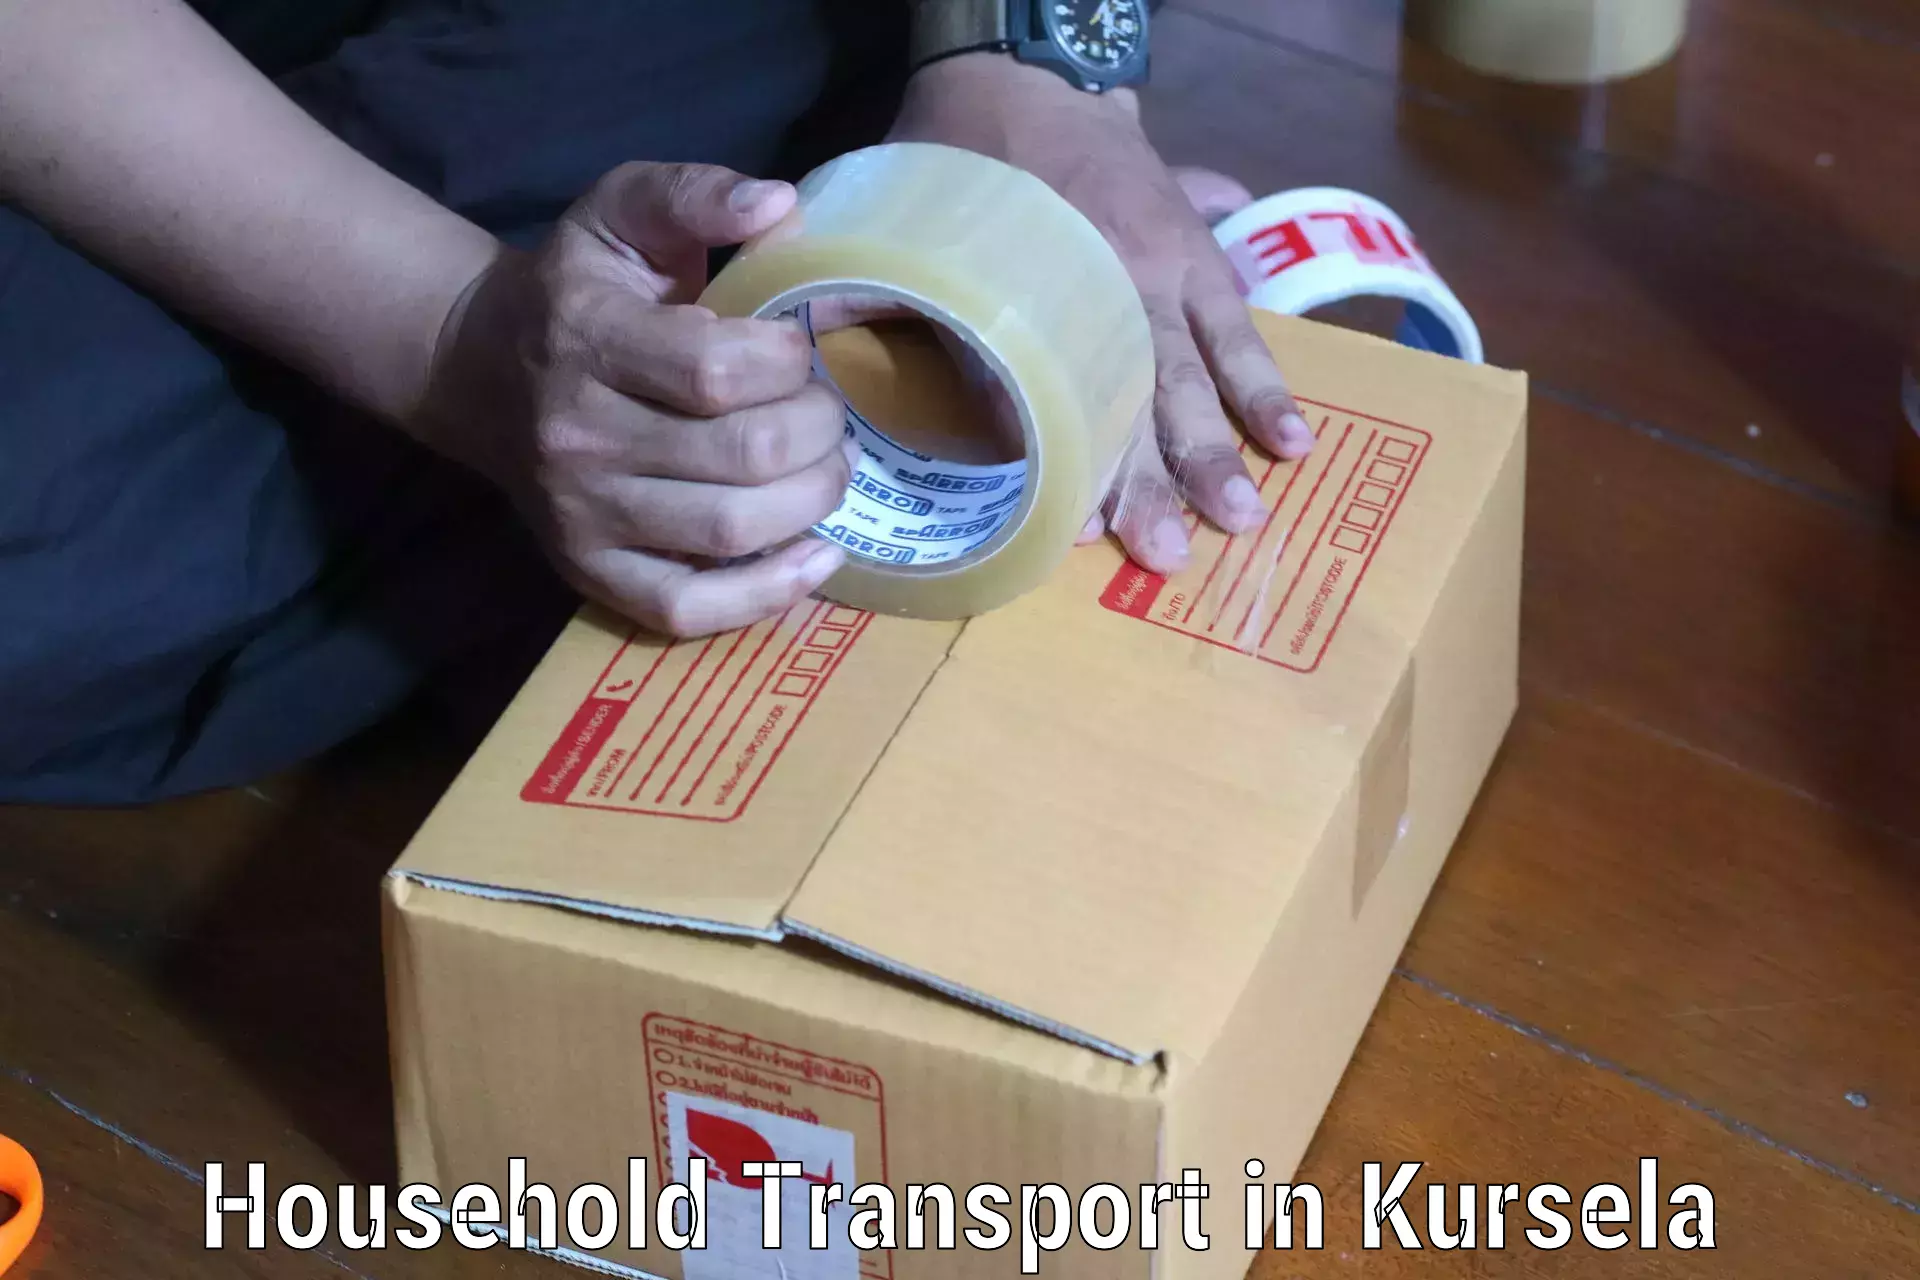 Household goods movers in Kursela